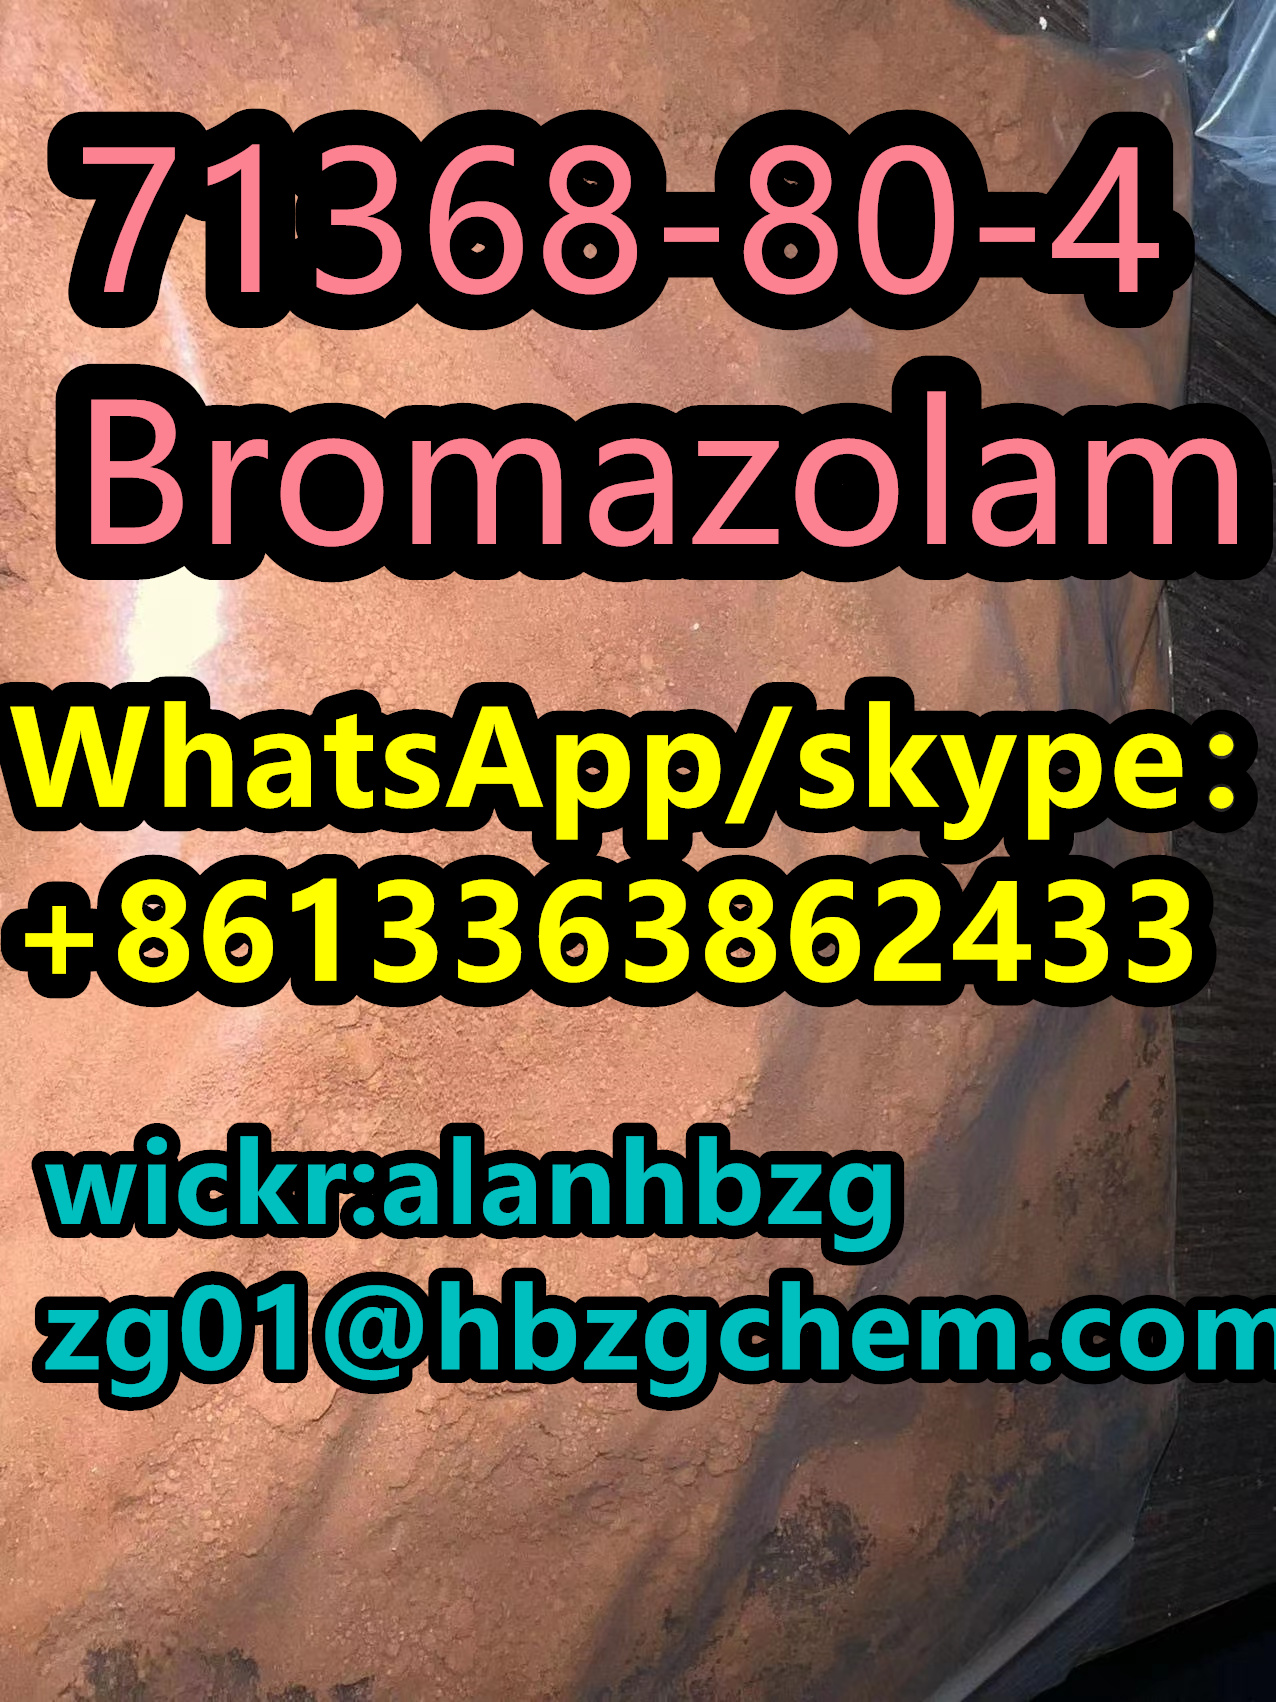 high purity Bromazolam 71368-80-4